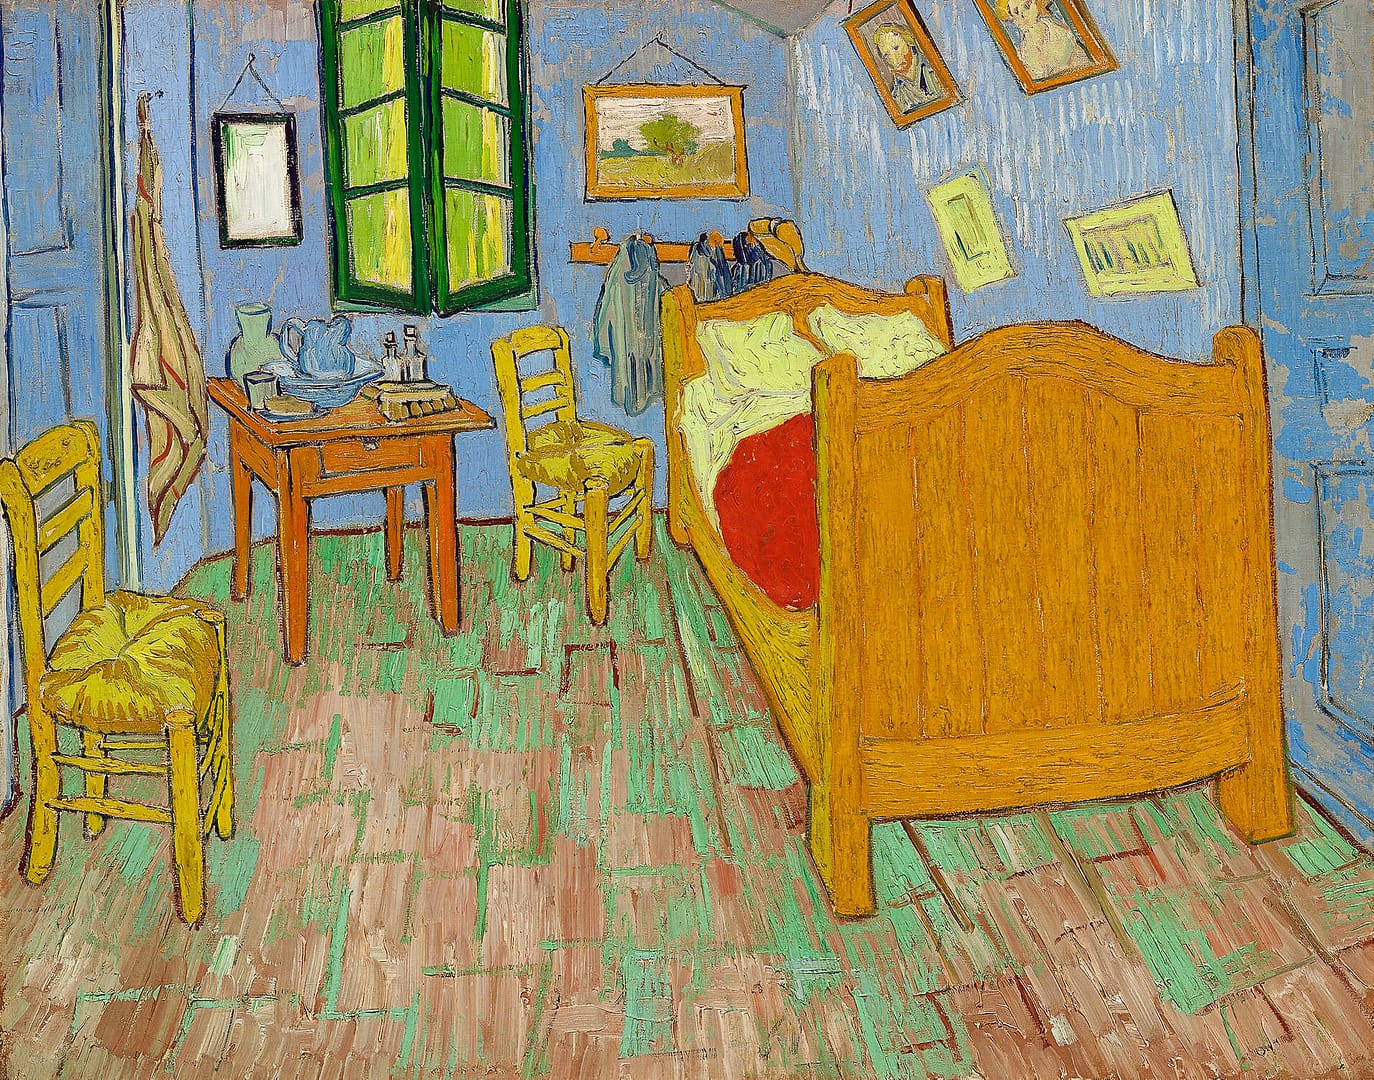 The Bedroom (1889) | Vincent Van Gogh | FREE DIGITAL DOWNLOAD